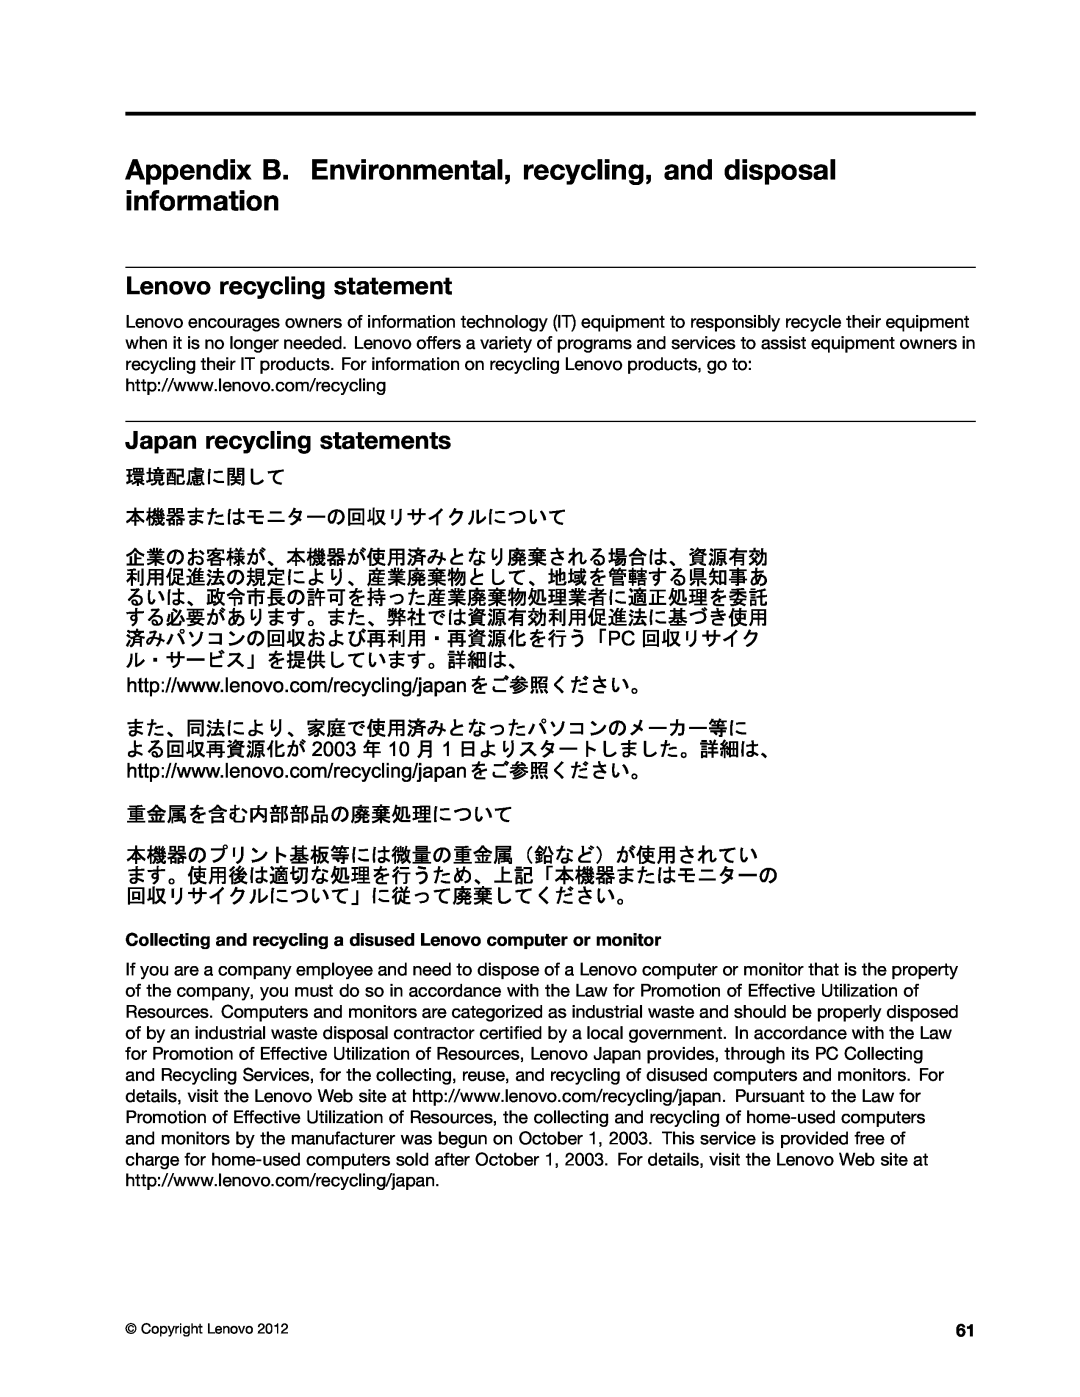 Lenovo 36795YU, 36822AU, 368229U Appendix B. Environmental, recycling, and disposal information, Lenovo recycling statement 